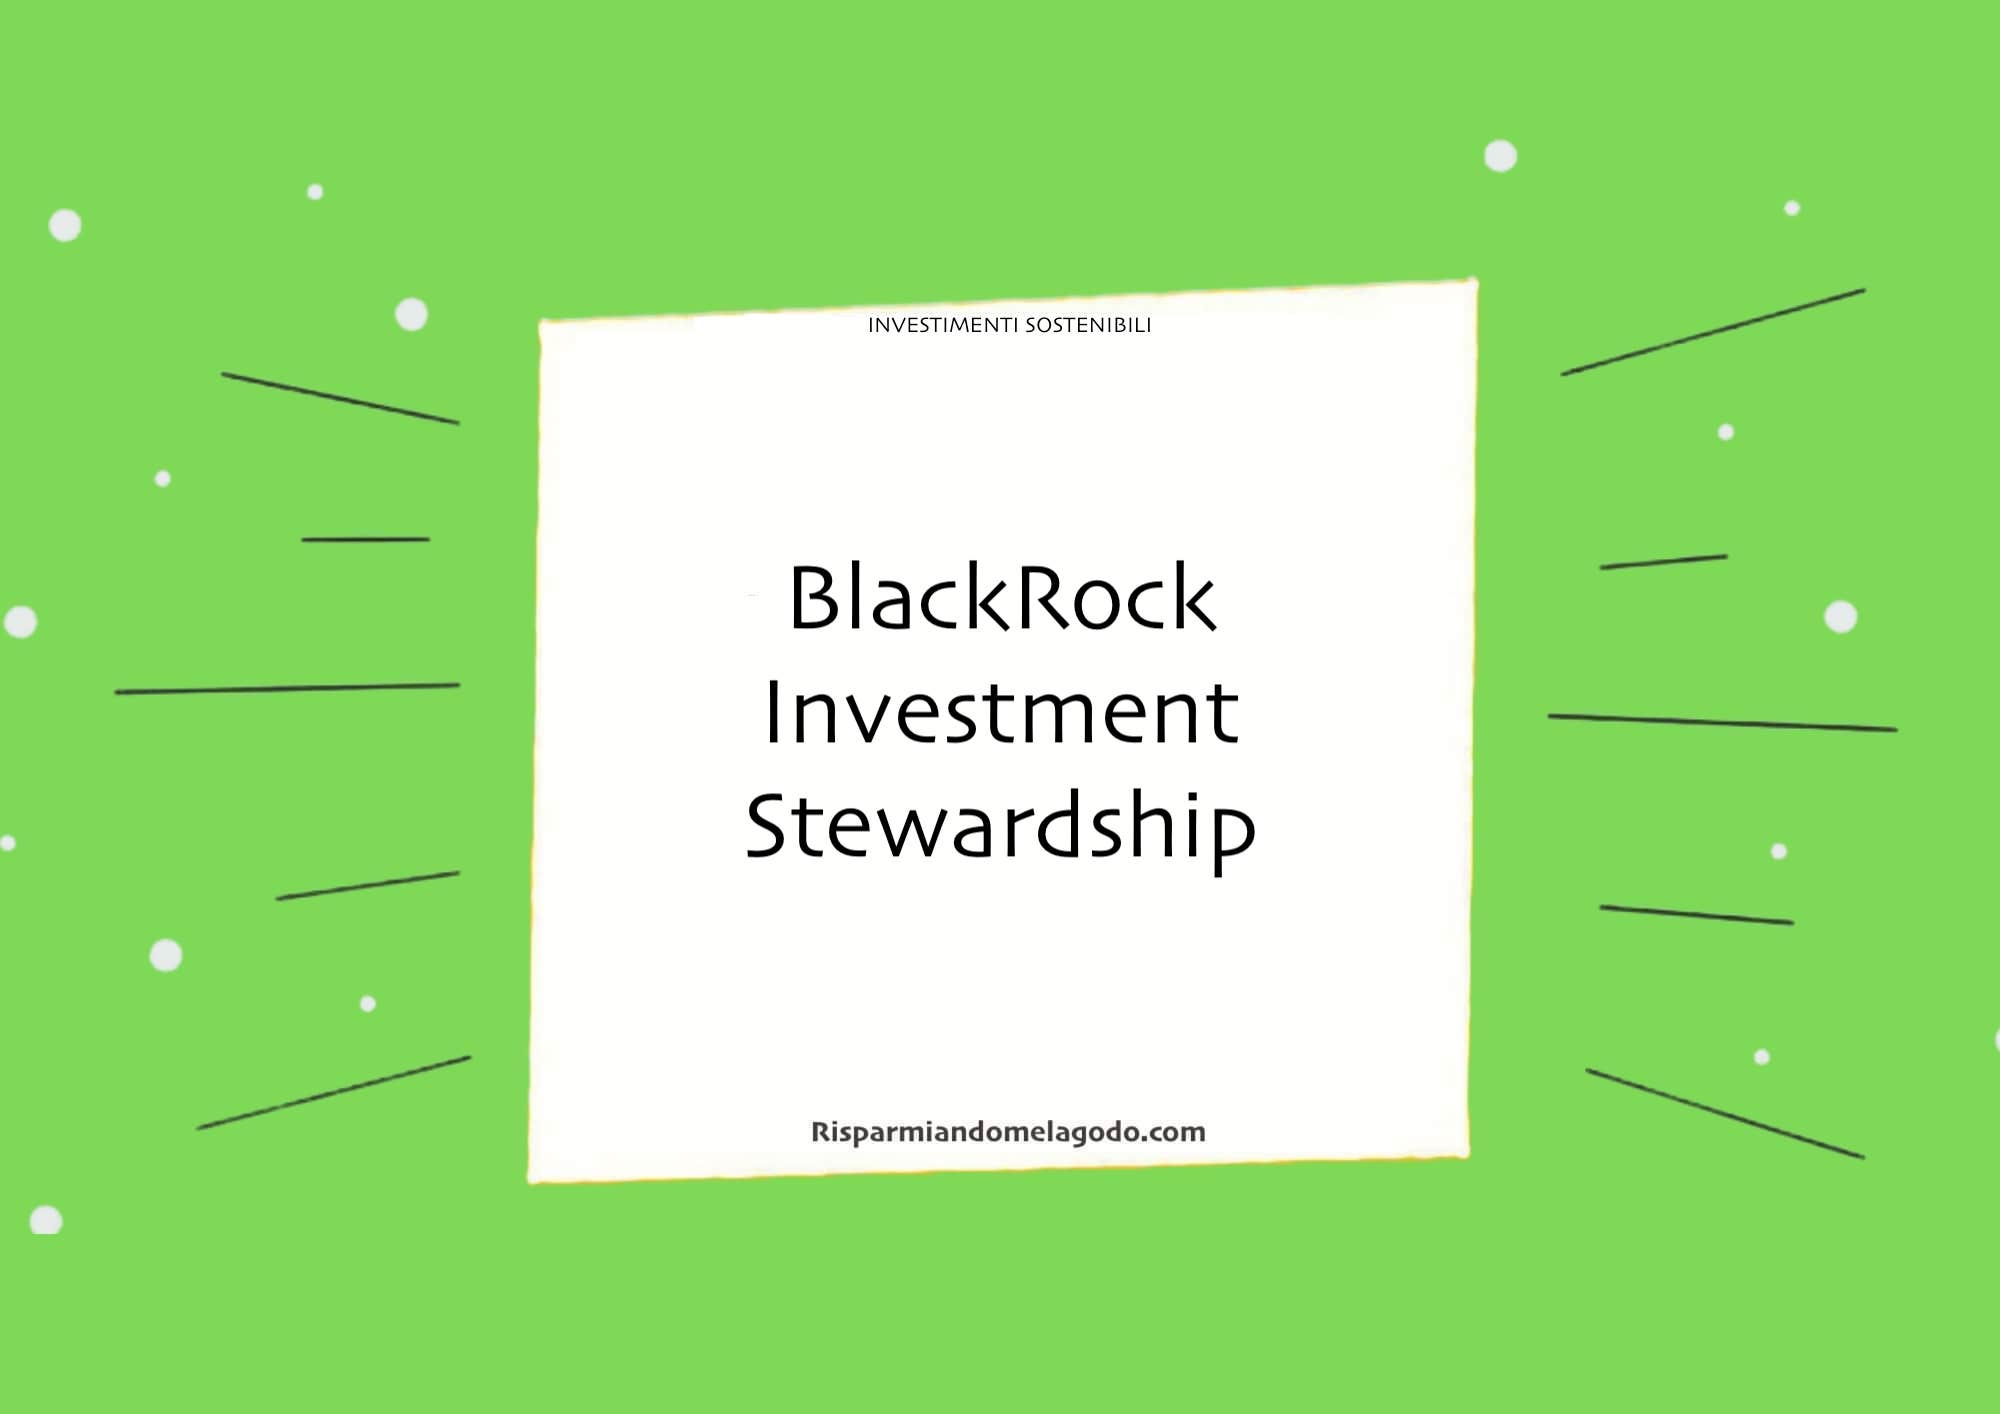 BlackRock Investment Stewardship